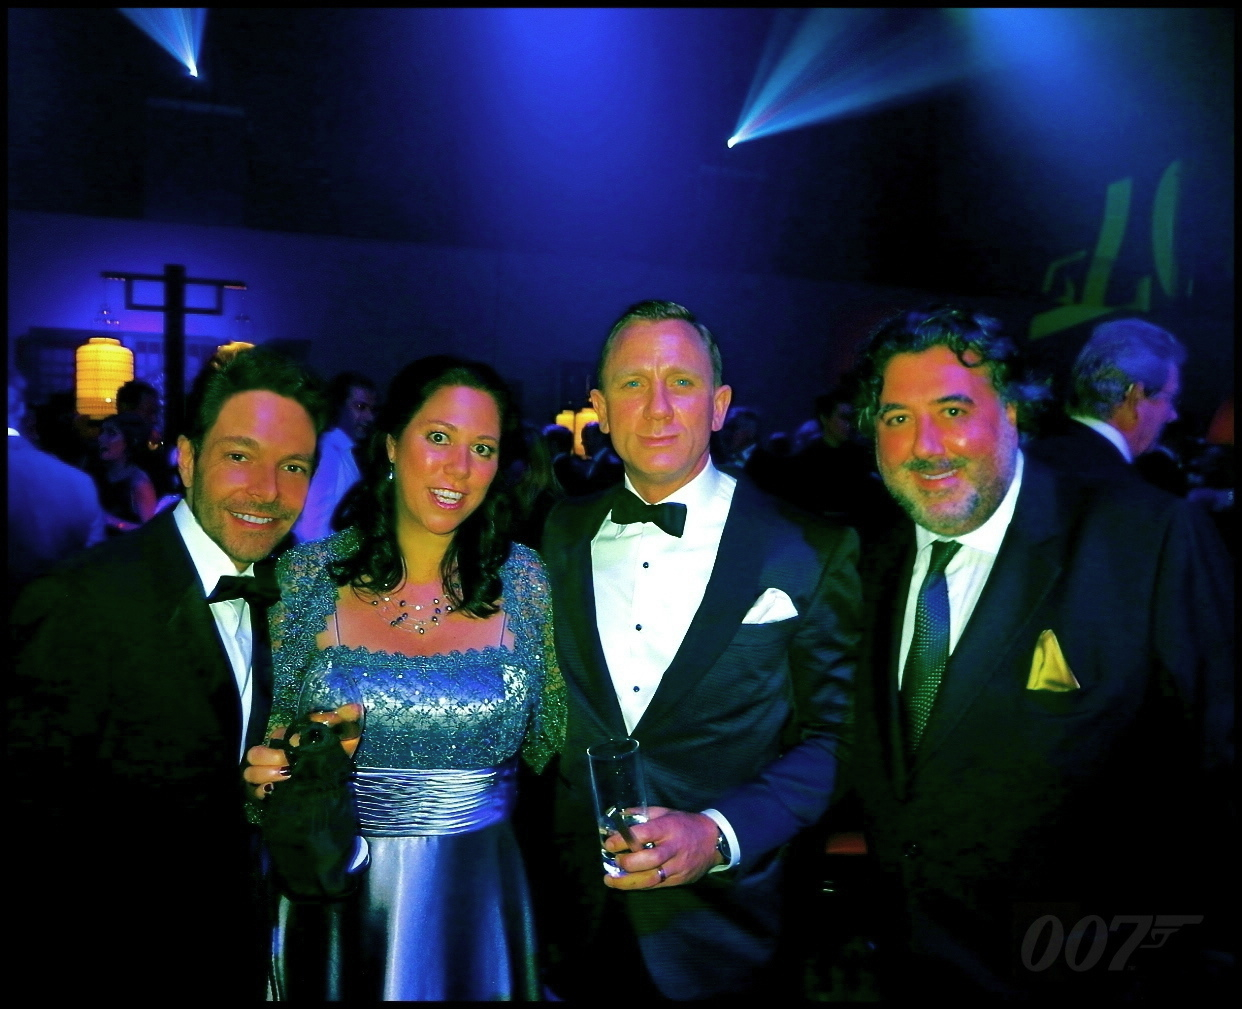 (caption left to right:) David Giammarco, Hilary Saltzman, Daniel Craig, and Steven Saltzman attend the Royal World Premiere of 